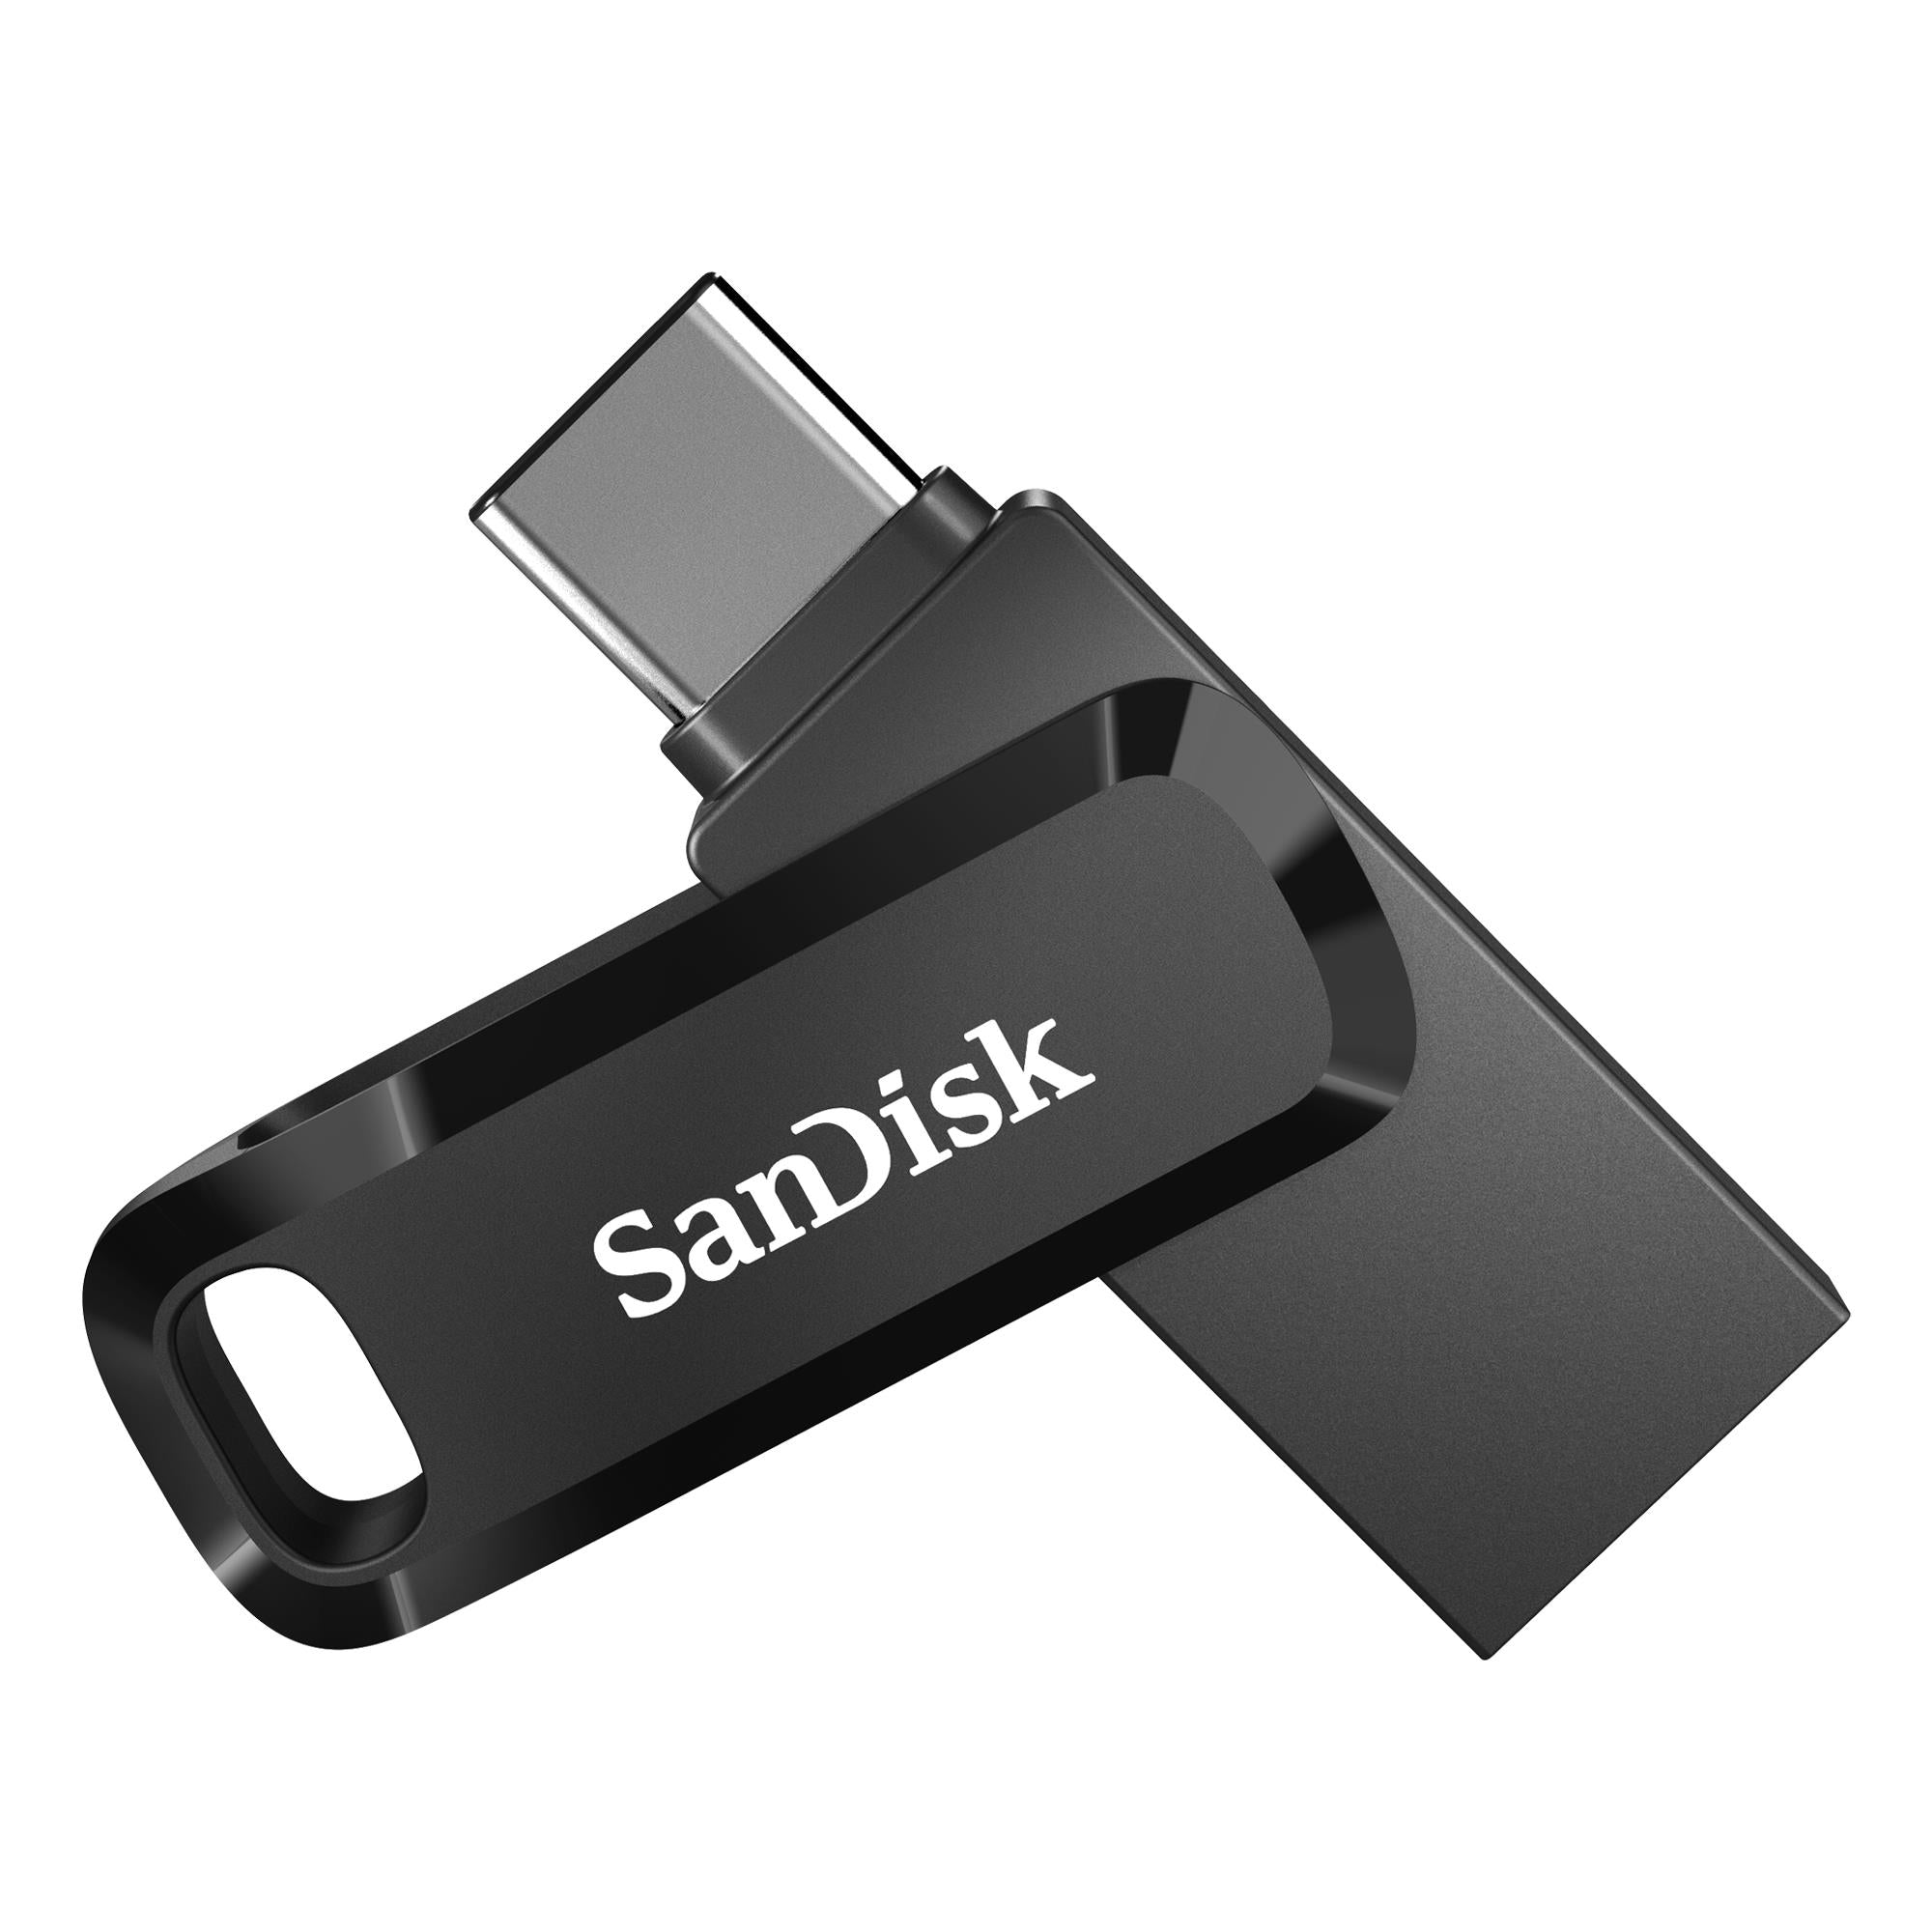 1TB USB Flash Drive 256GB Memory Stick for iPhone iPad PC Photo Storage  Stick US